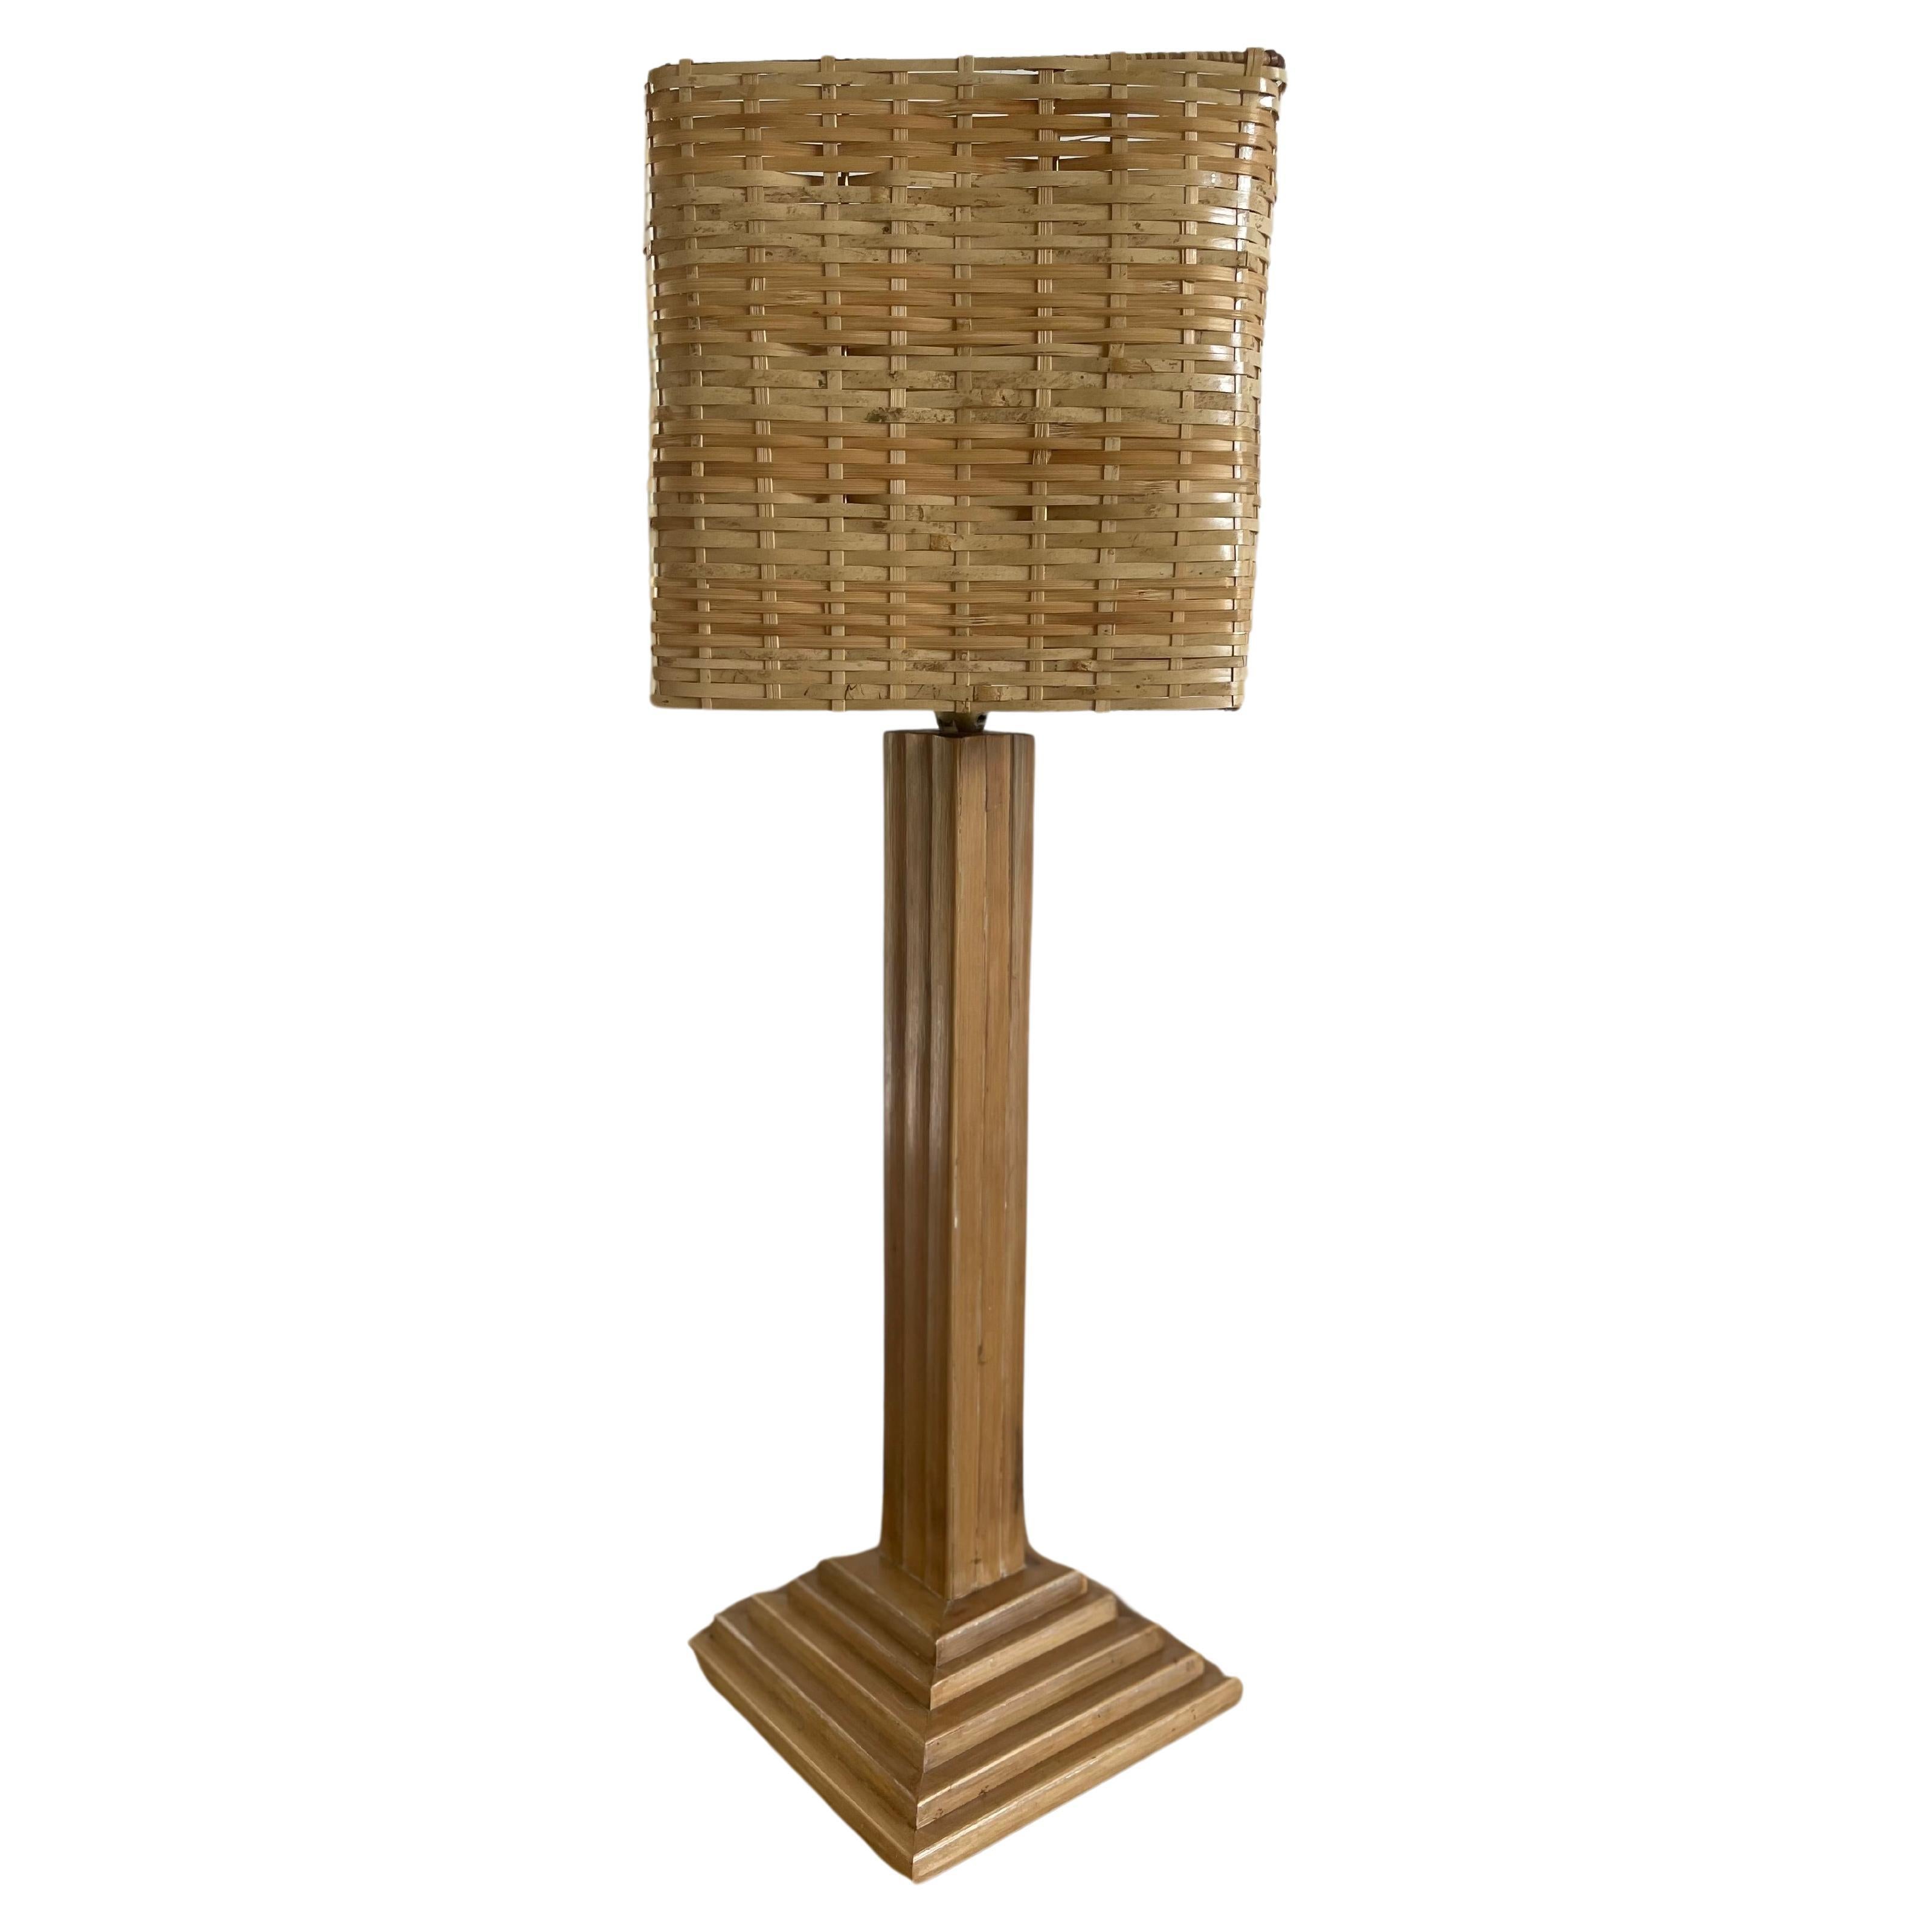 Lampe de table moderniste en bambou style Peter Blake